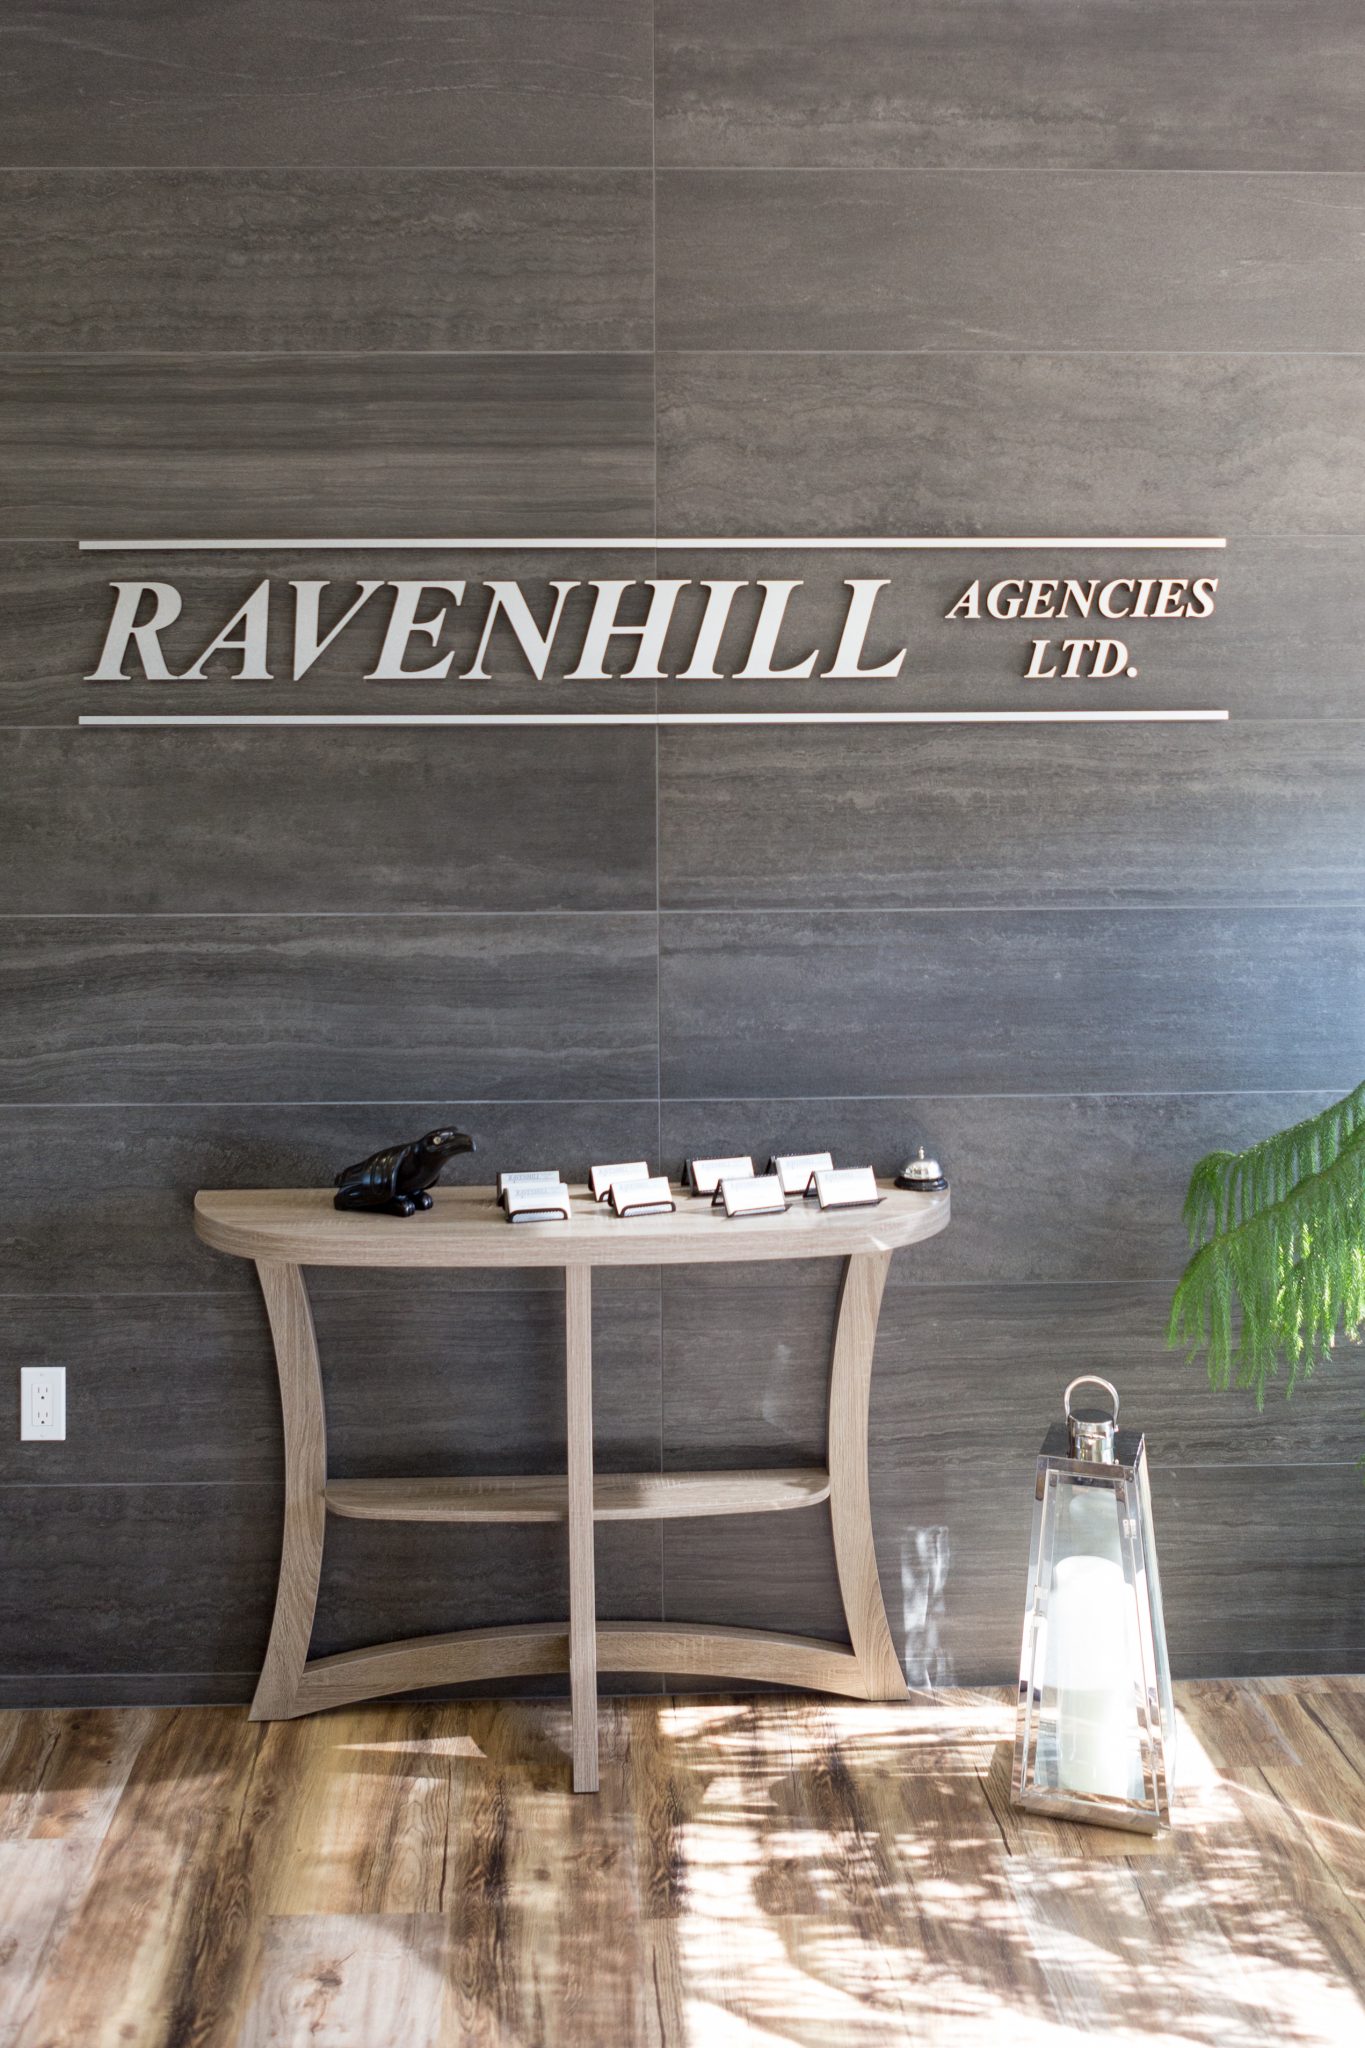 ravenhill insurance